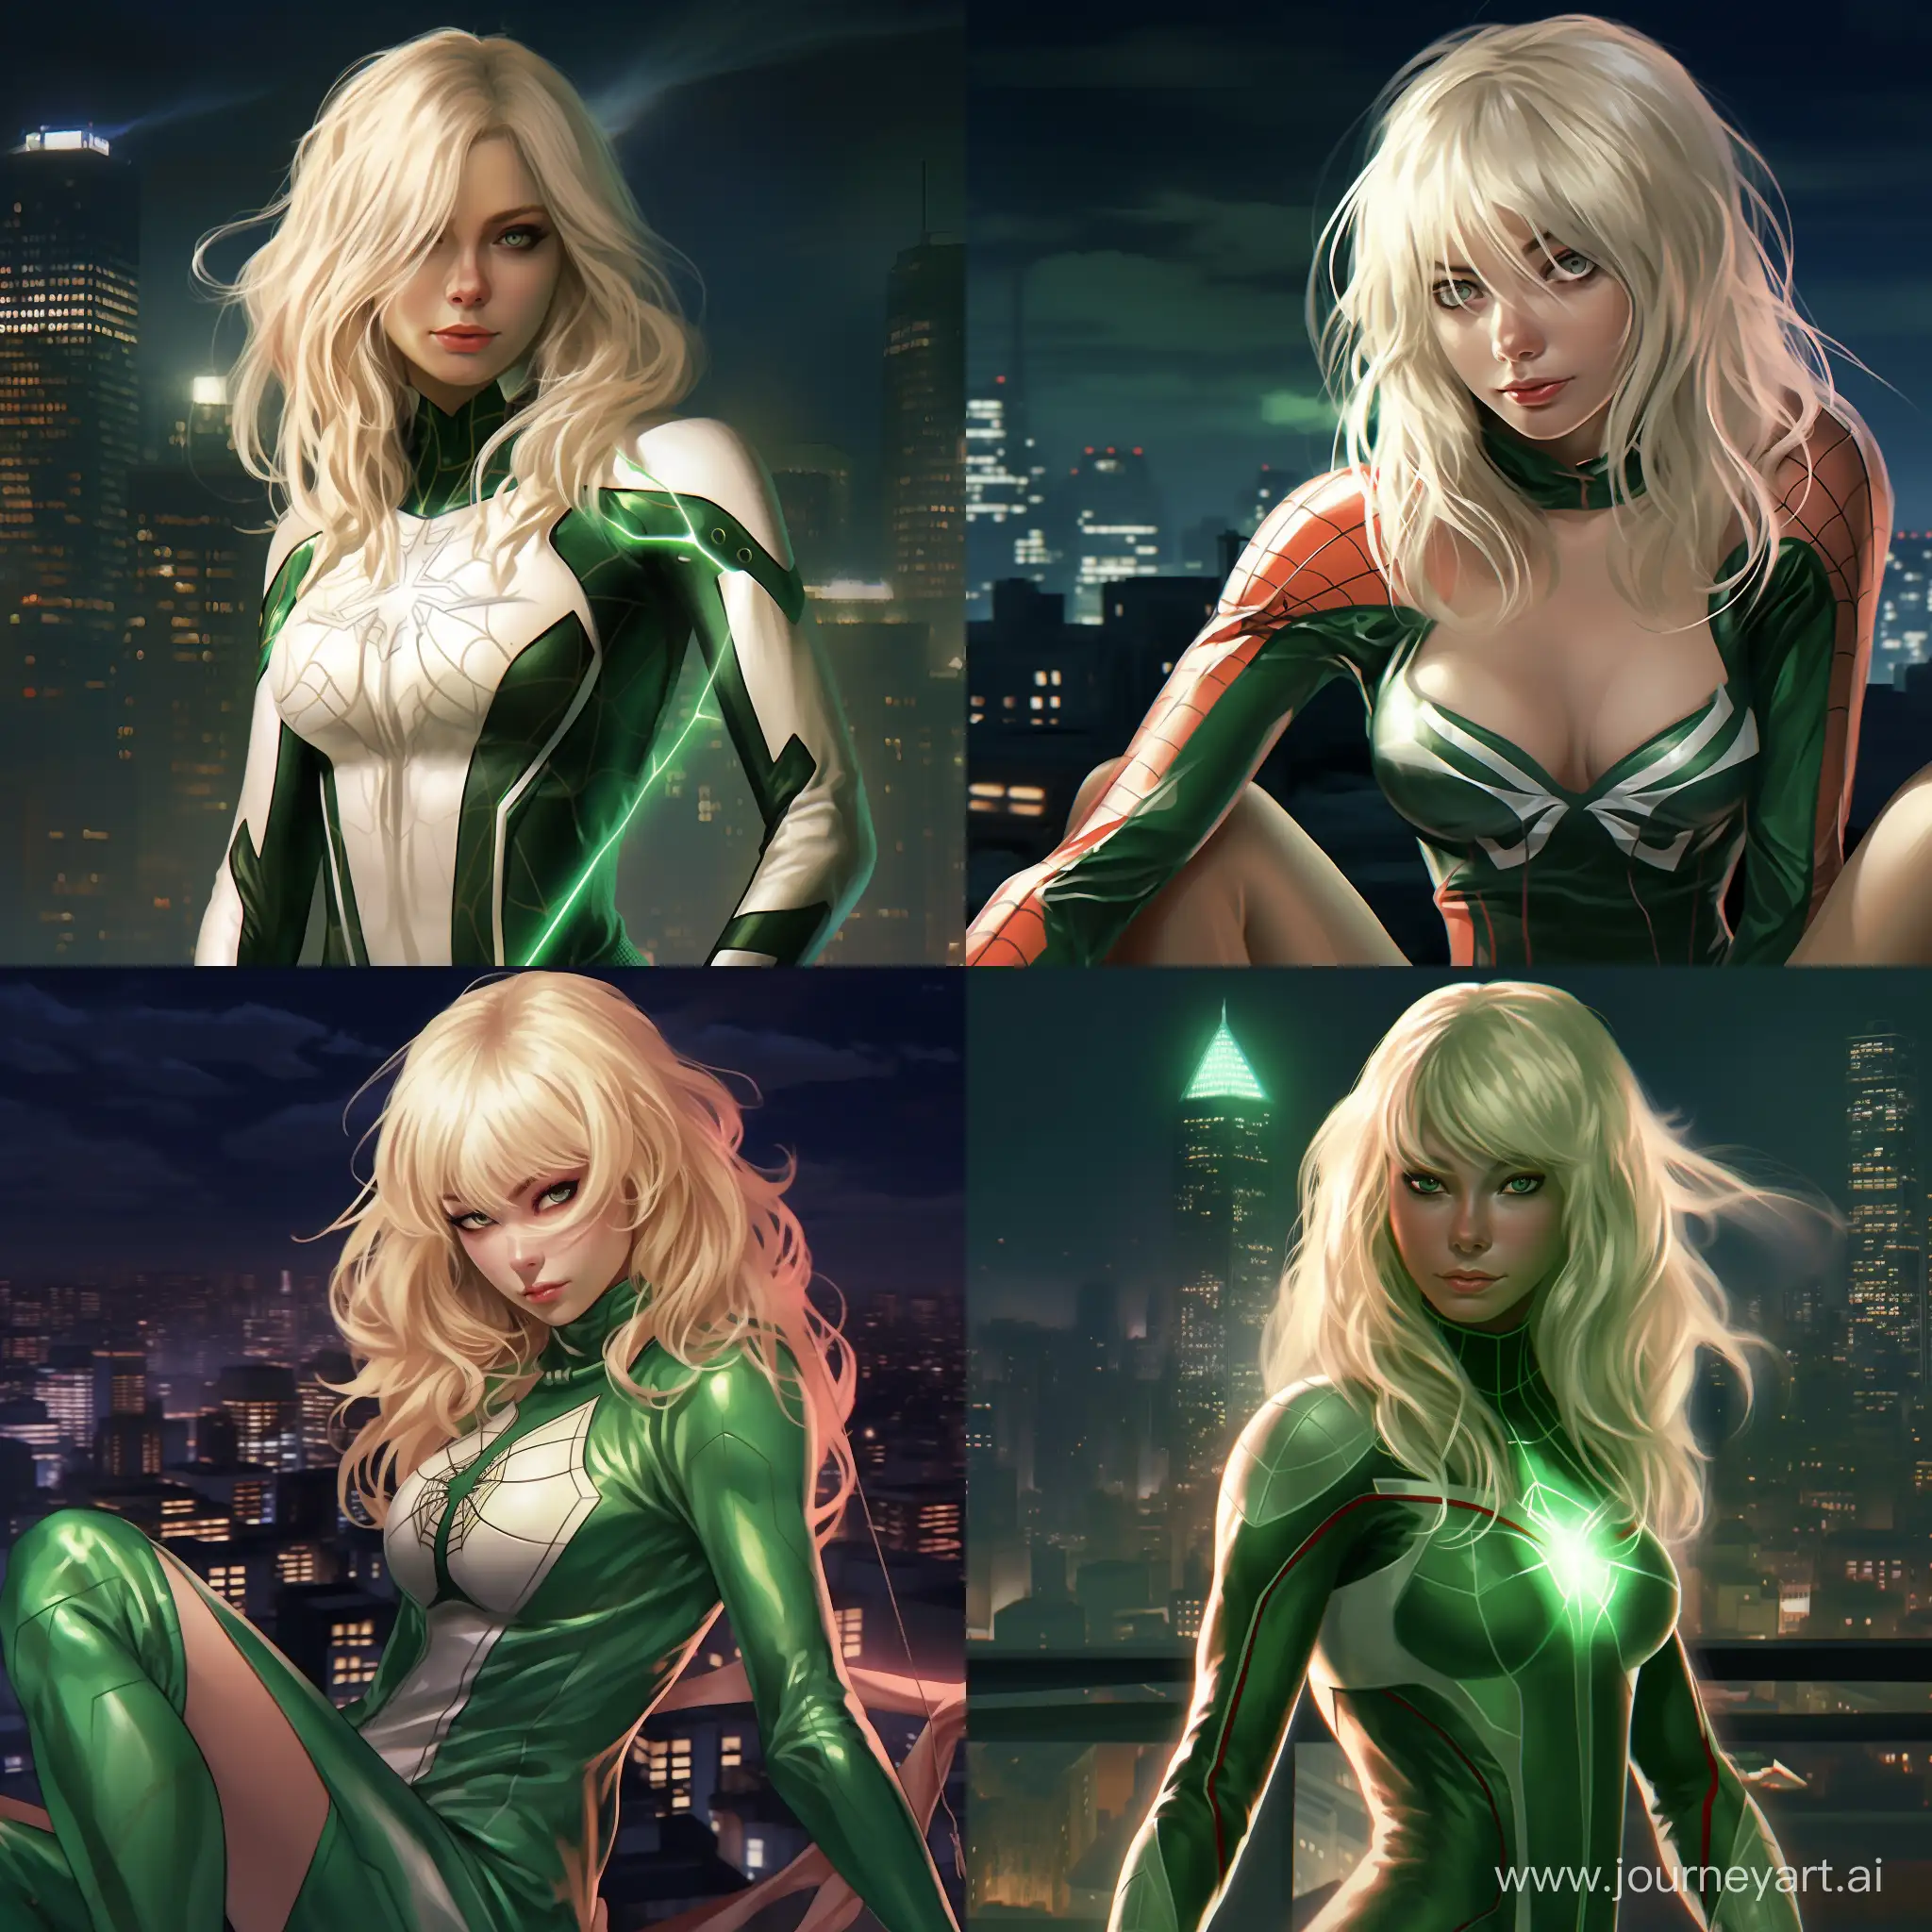 Blonde-Girl-in-Striking-Green-SpiderMan-Costume-Against-Night-City-Skyline